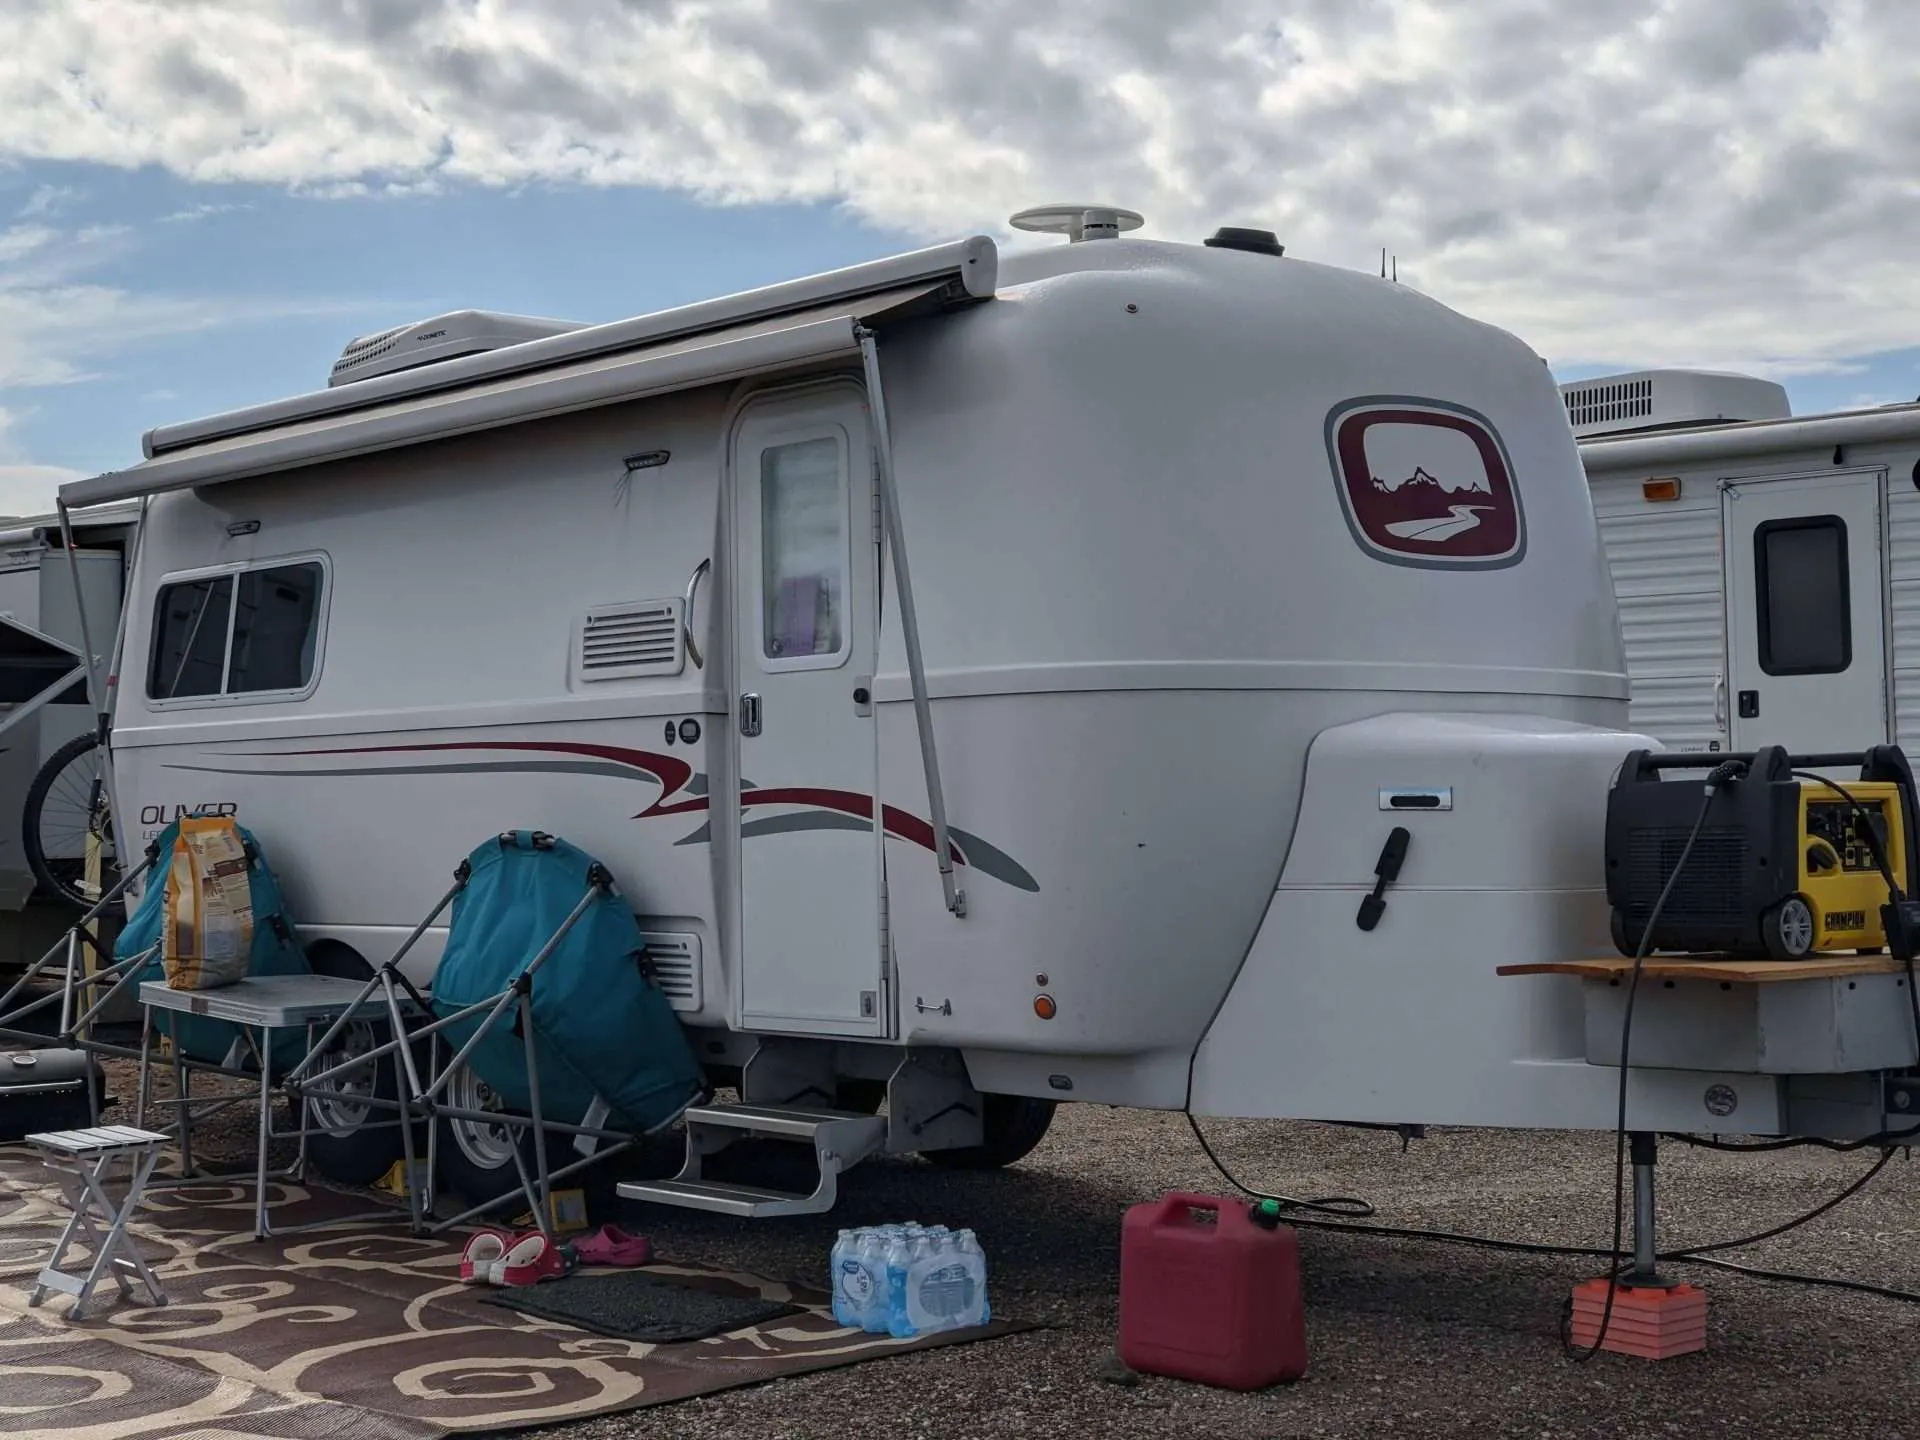 Oliver travel trailer at campsite